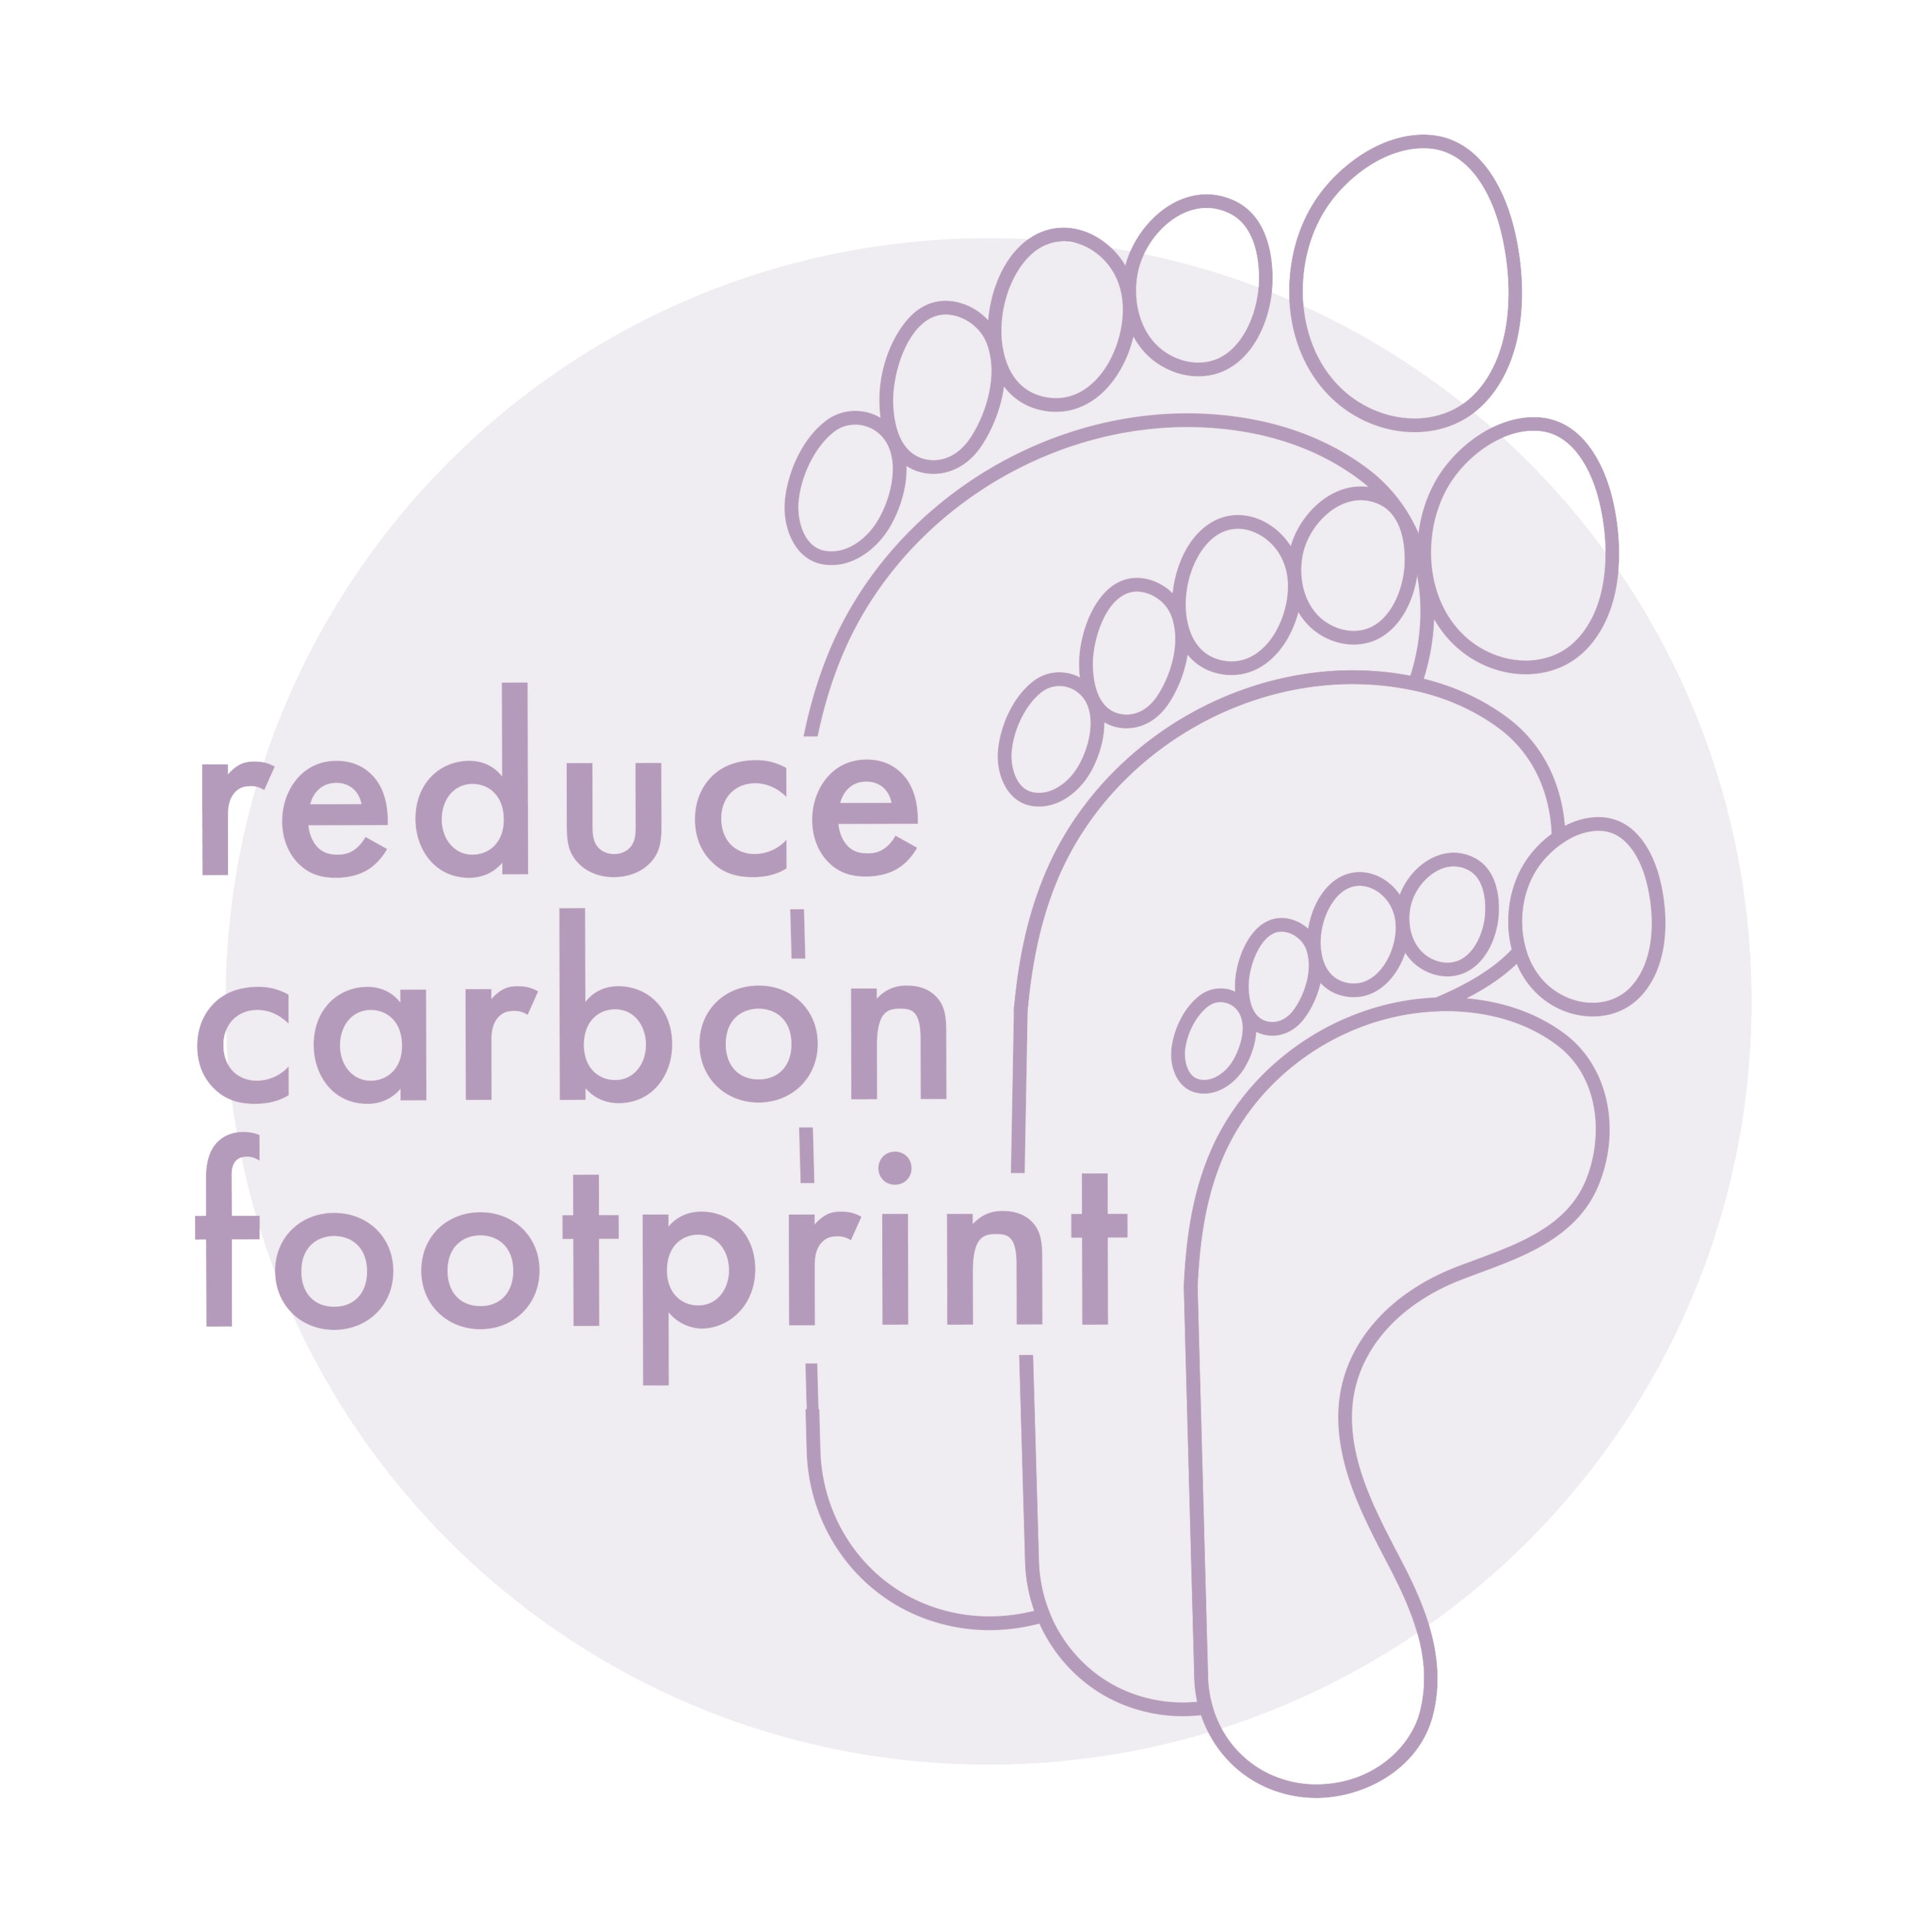 Carbon Reducing Footprint image Text